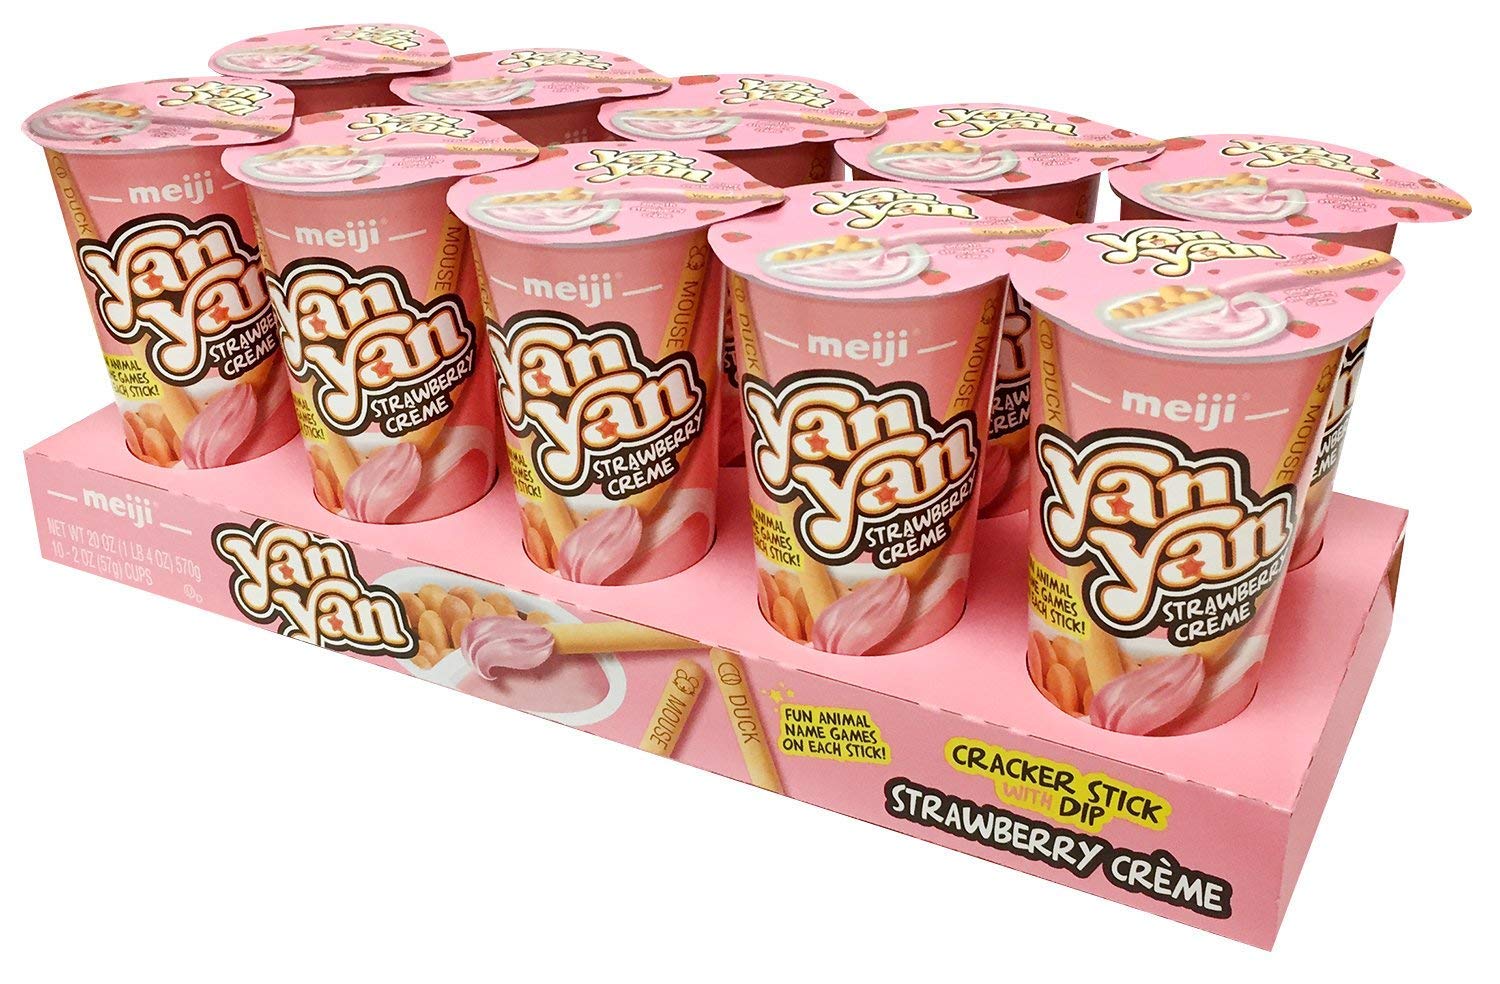 Meiji Yan Yan Dipping Sticks, Strawberry Crème - 2 oz, Pack of 10 - Cracker Sticks with Fun Animals Phrases